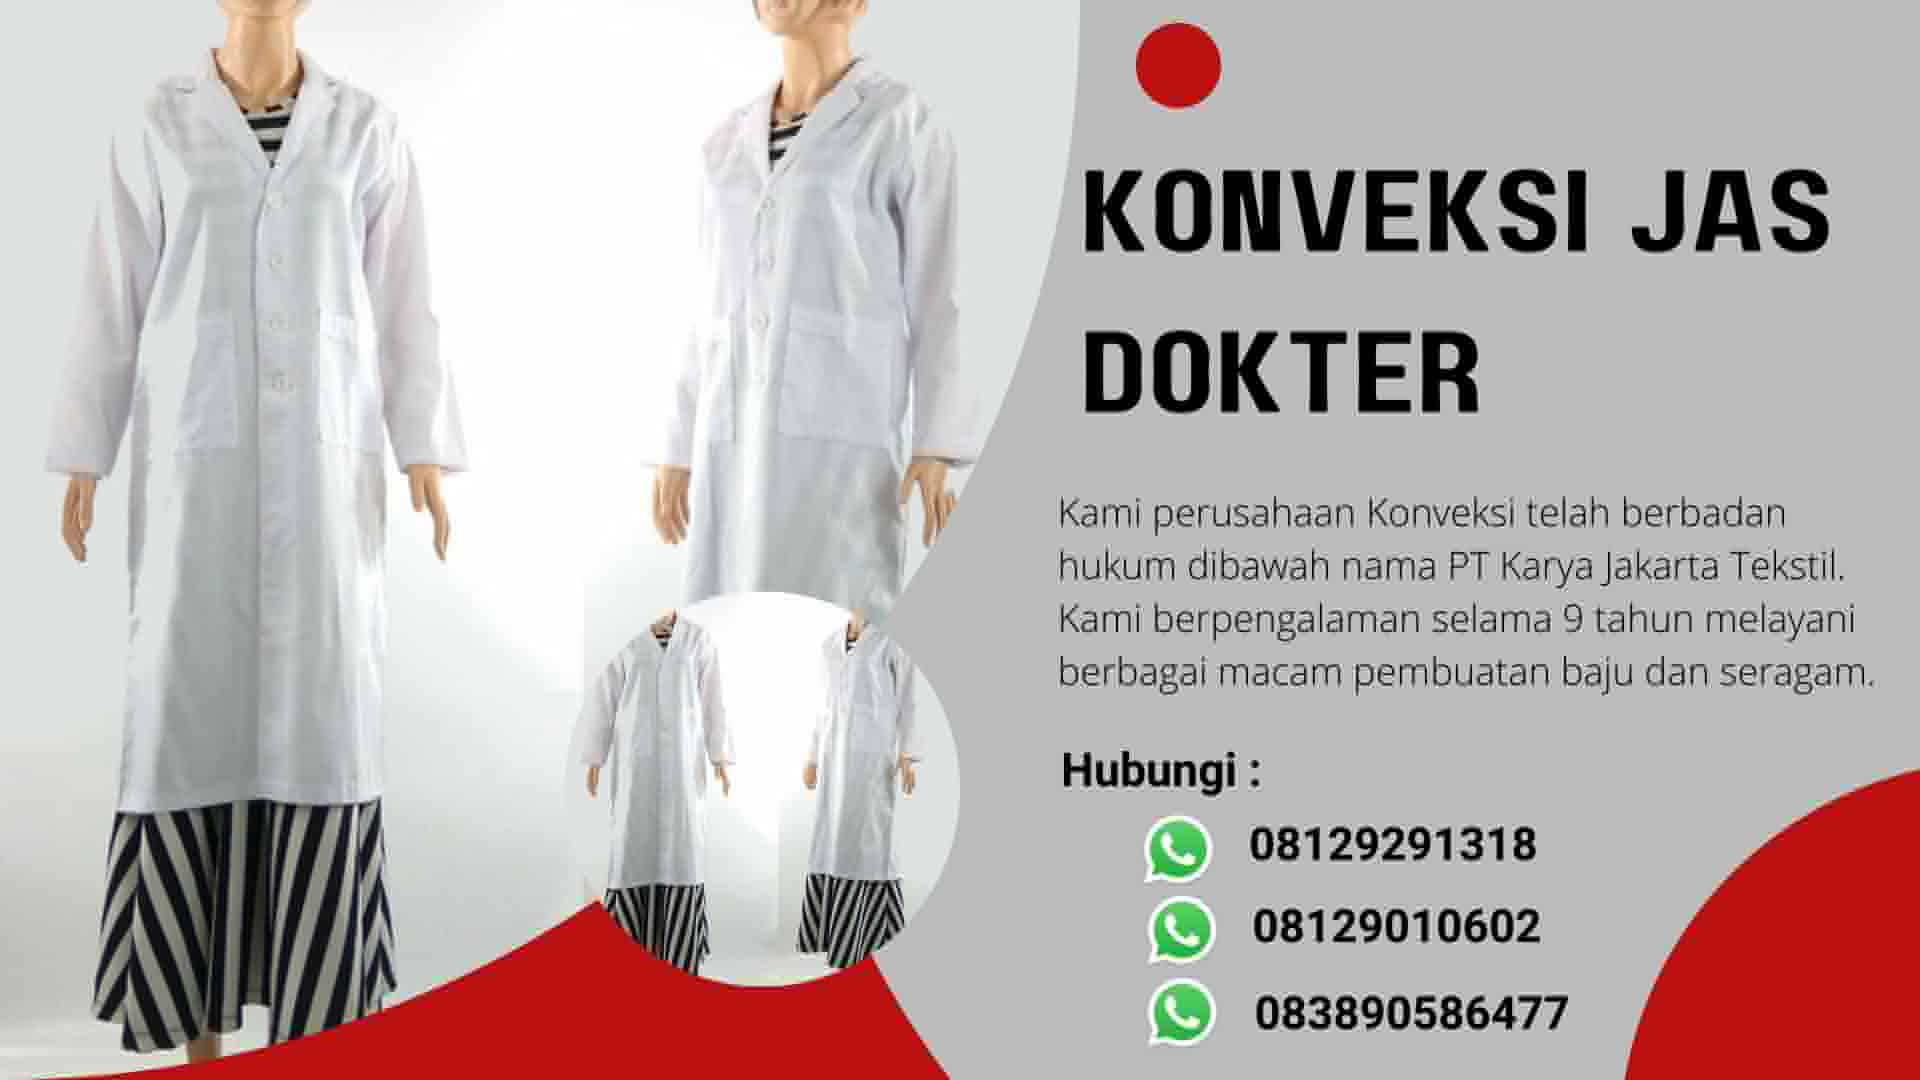 Ciptakan Kesempurnaan Profesional Penawaran Konveksi Jas Dokter Berkualitas Tinggi di Jakarta, Hubungi WA 08129291318